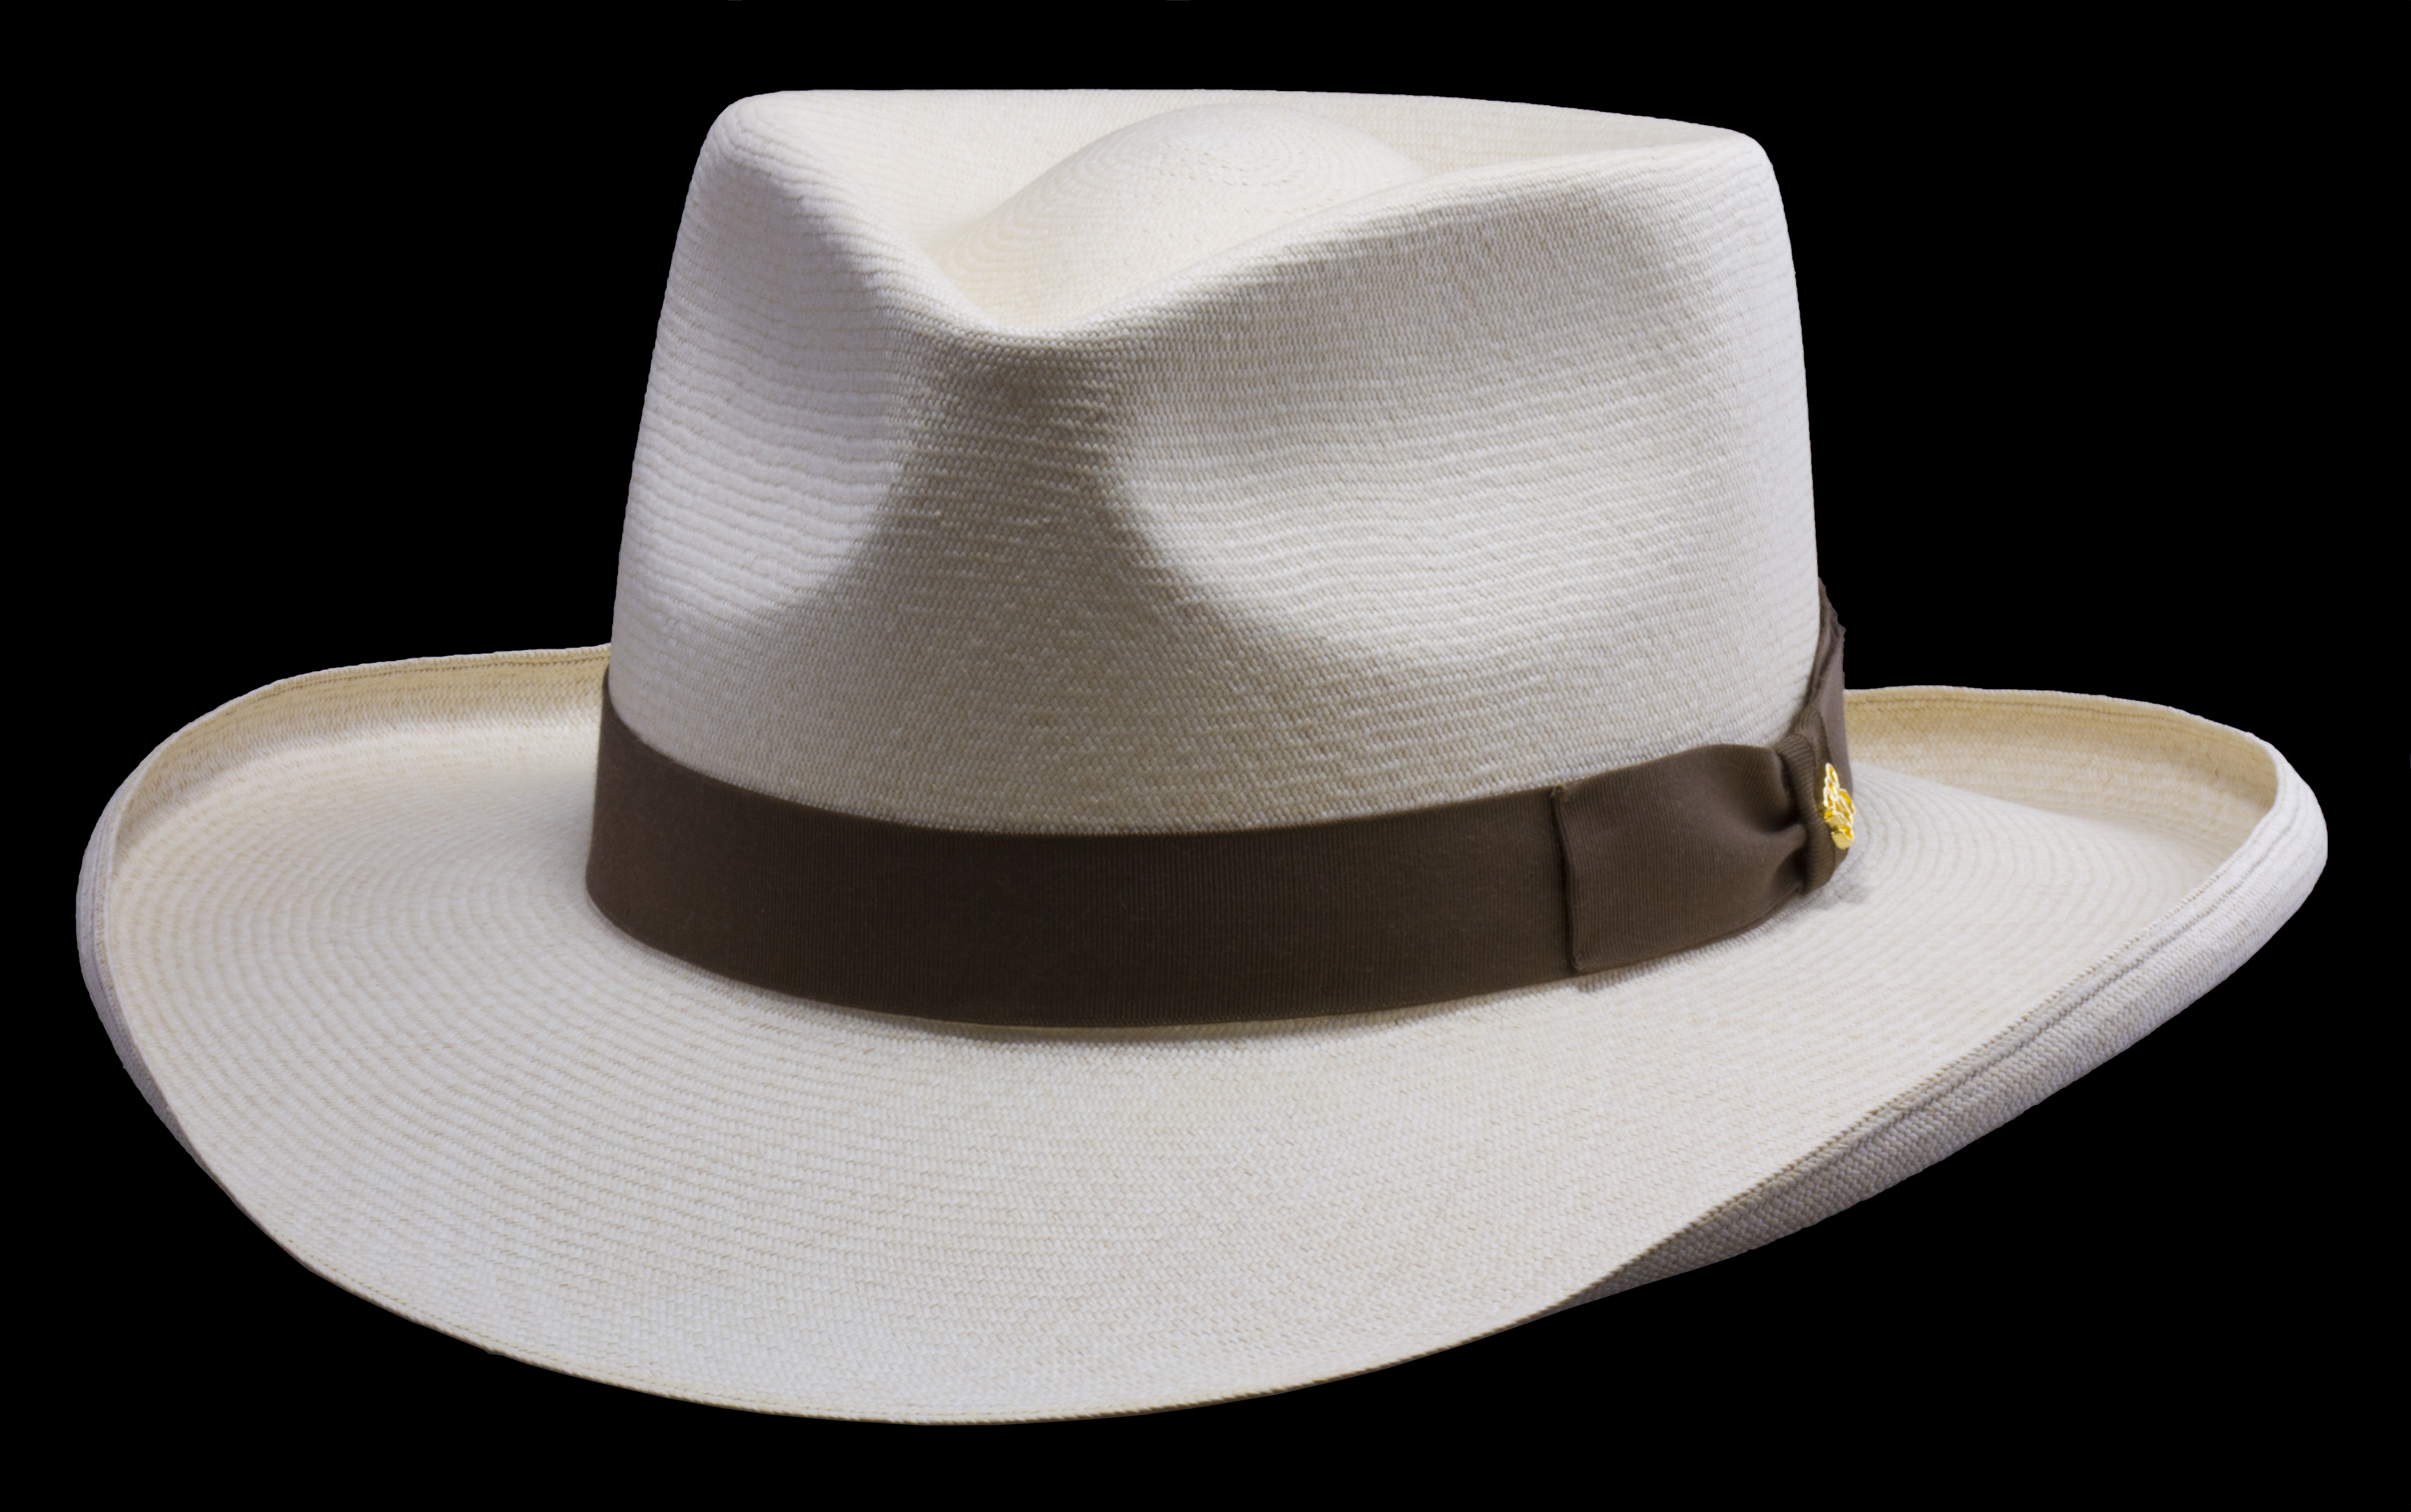 Кастом панамы. Mens Panama hat. Размеры шляпа Original Panamahut, Panama hat, Montecristi:. Greeley hat works купить. Hat works